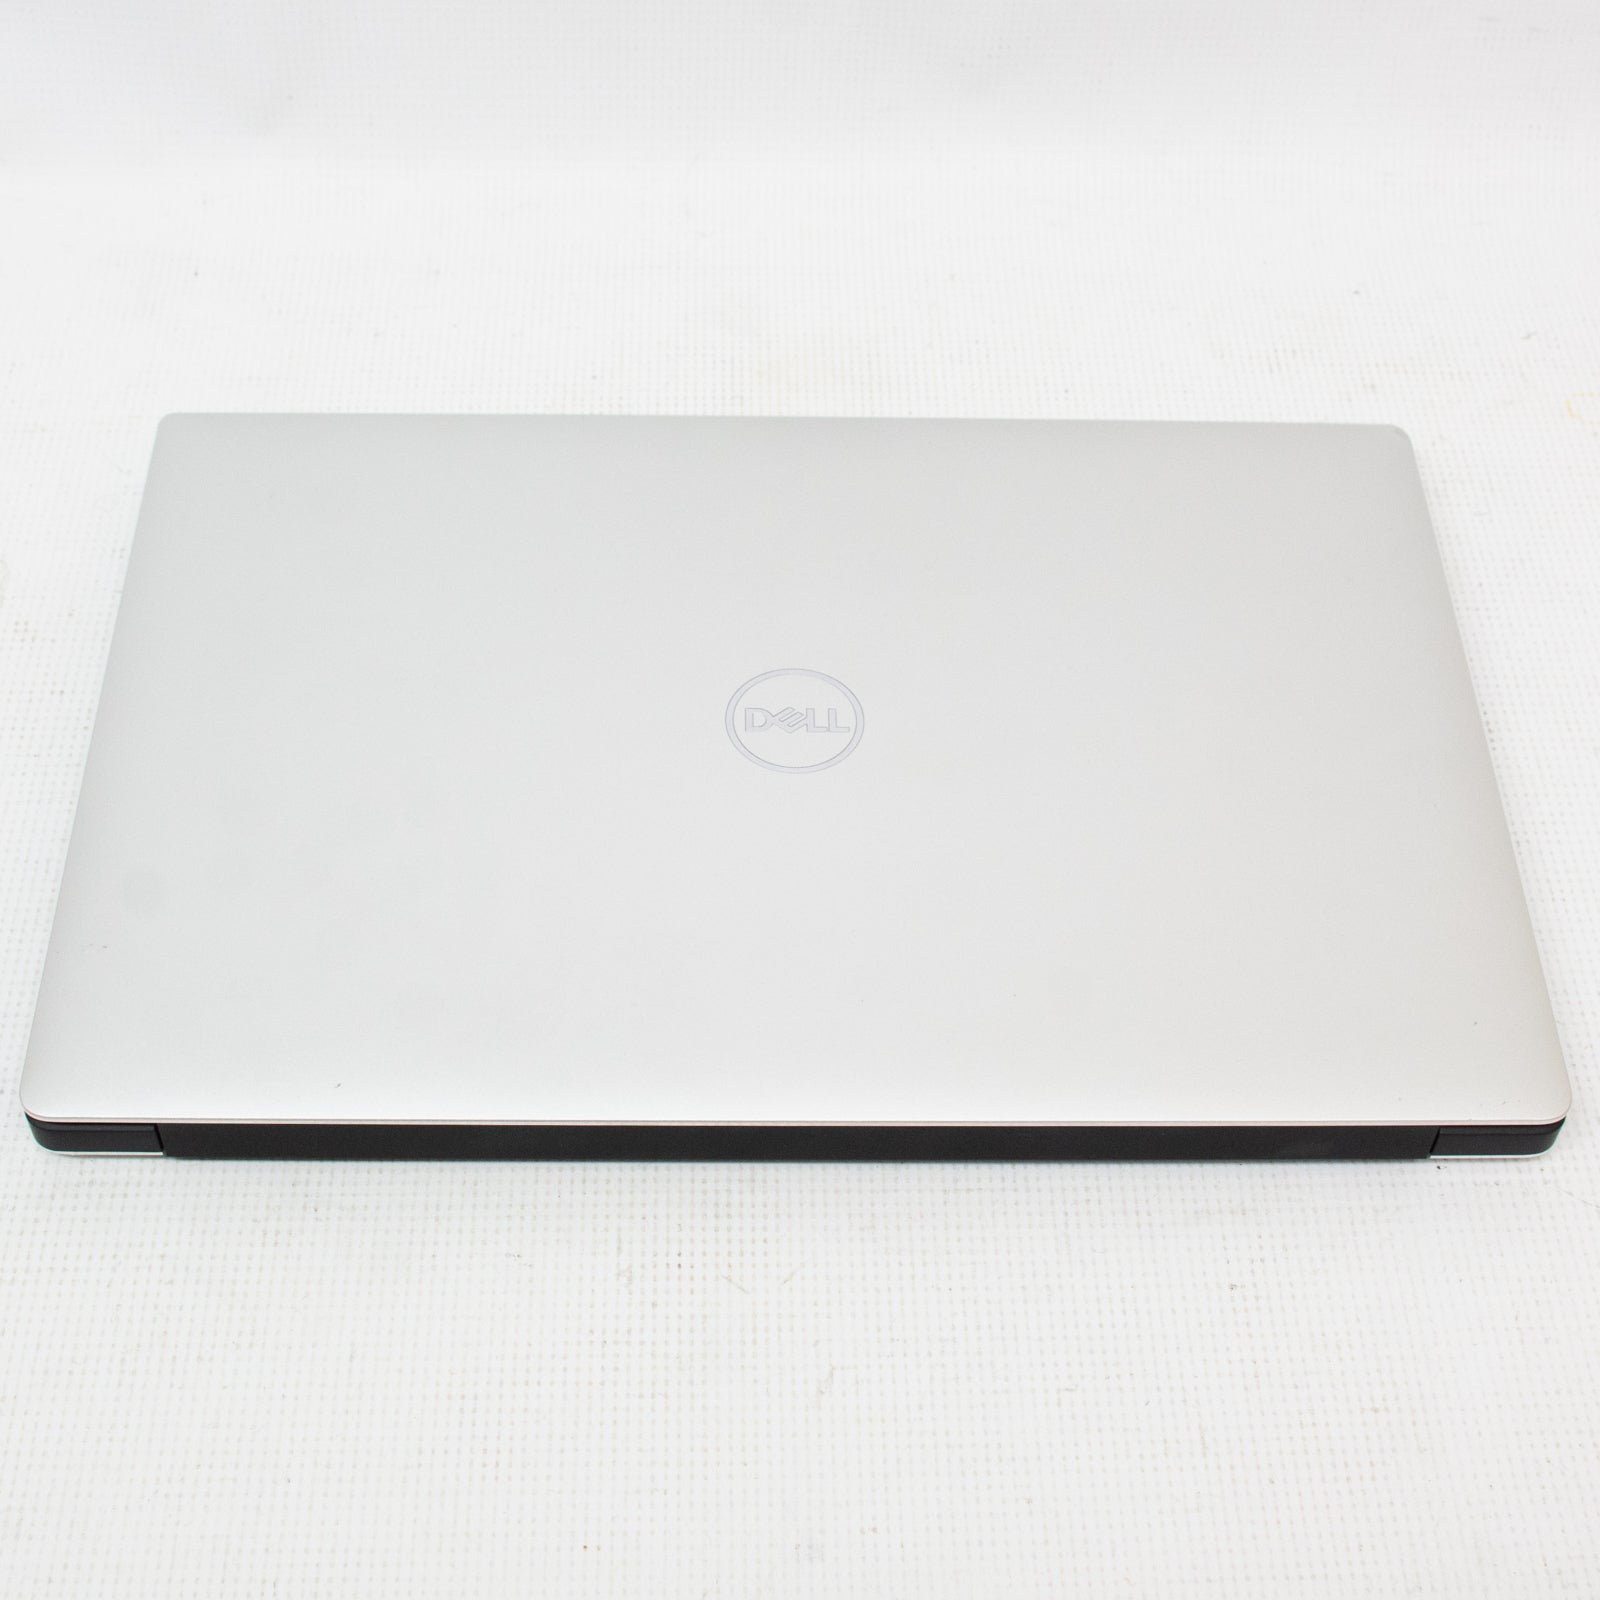 Dell XPS 15-7590 Laptop - Intel i9-9980HK @ 2.4Ghz, 32 GB Ram, 1 TB SSD, GTX 1650,